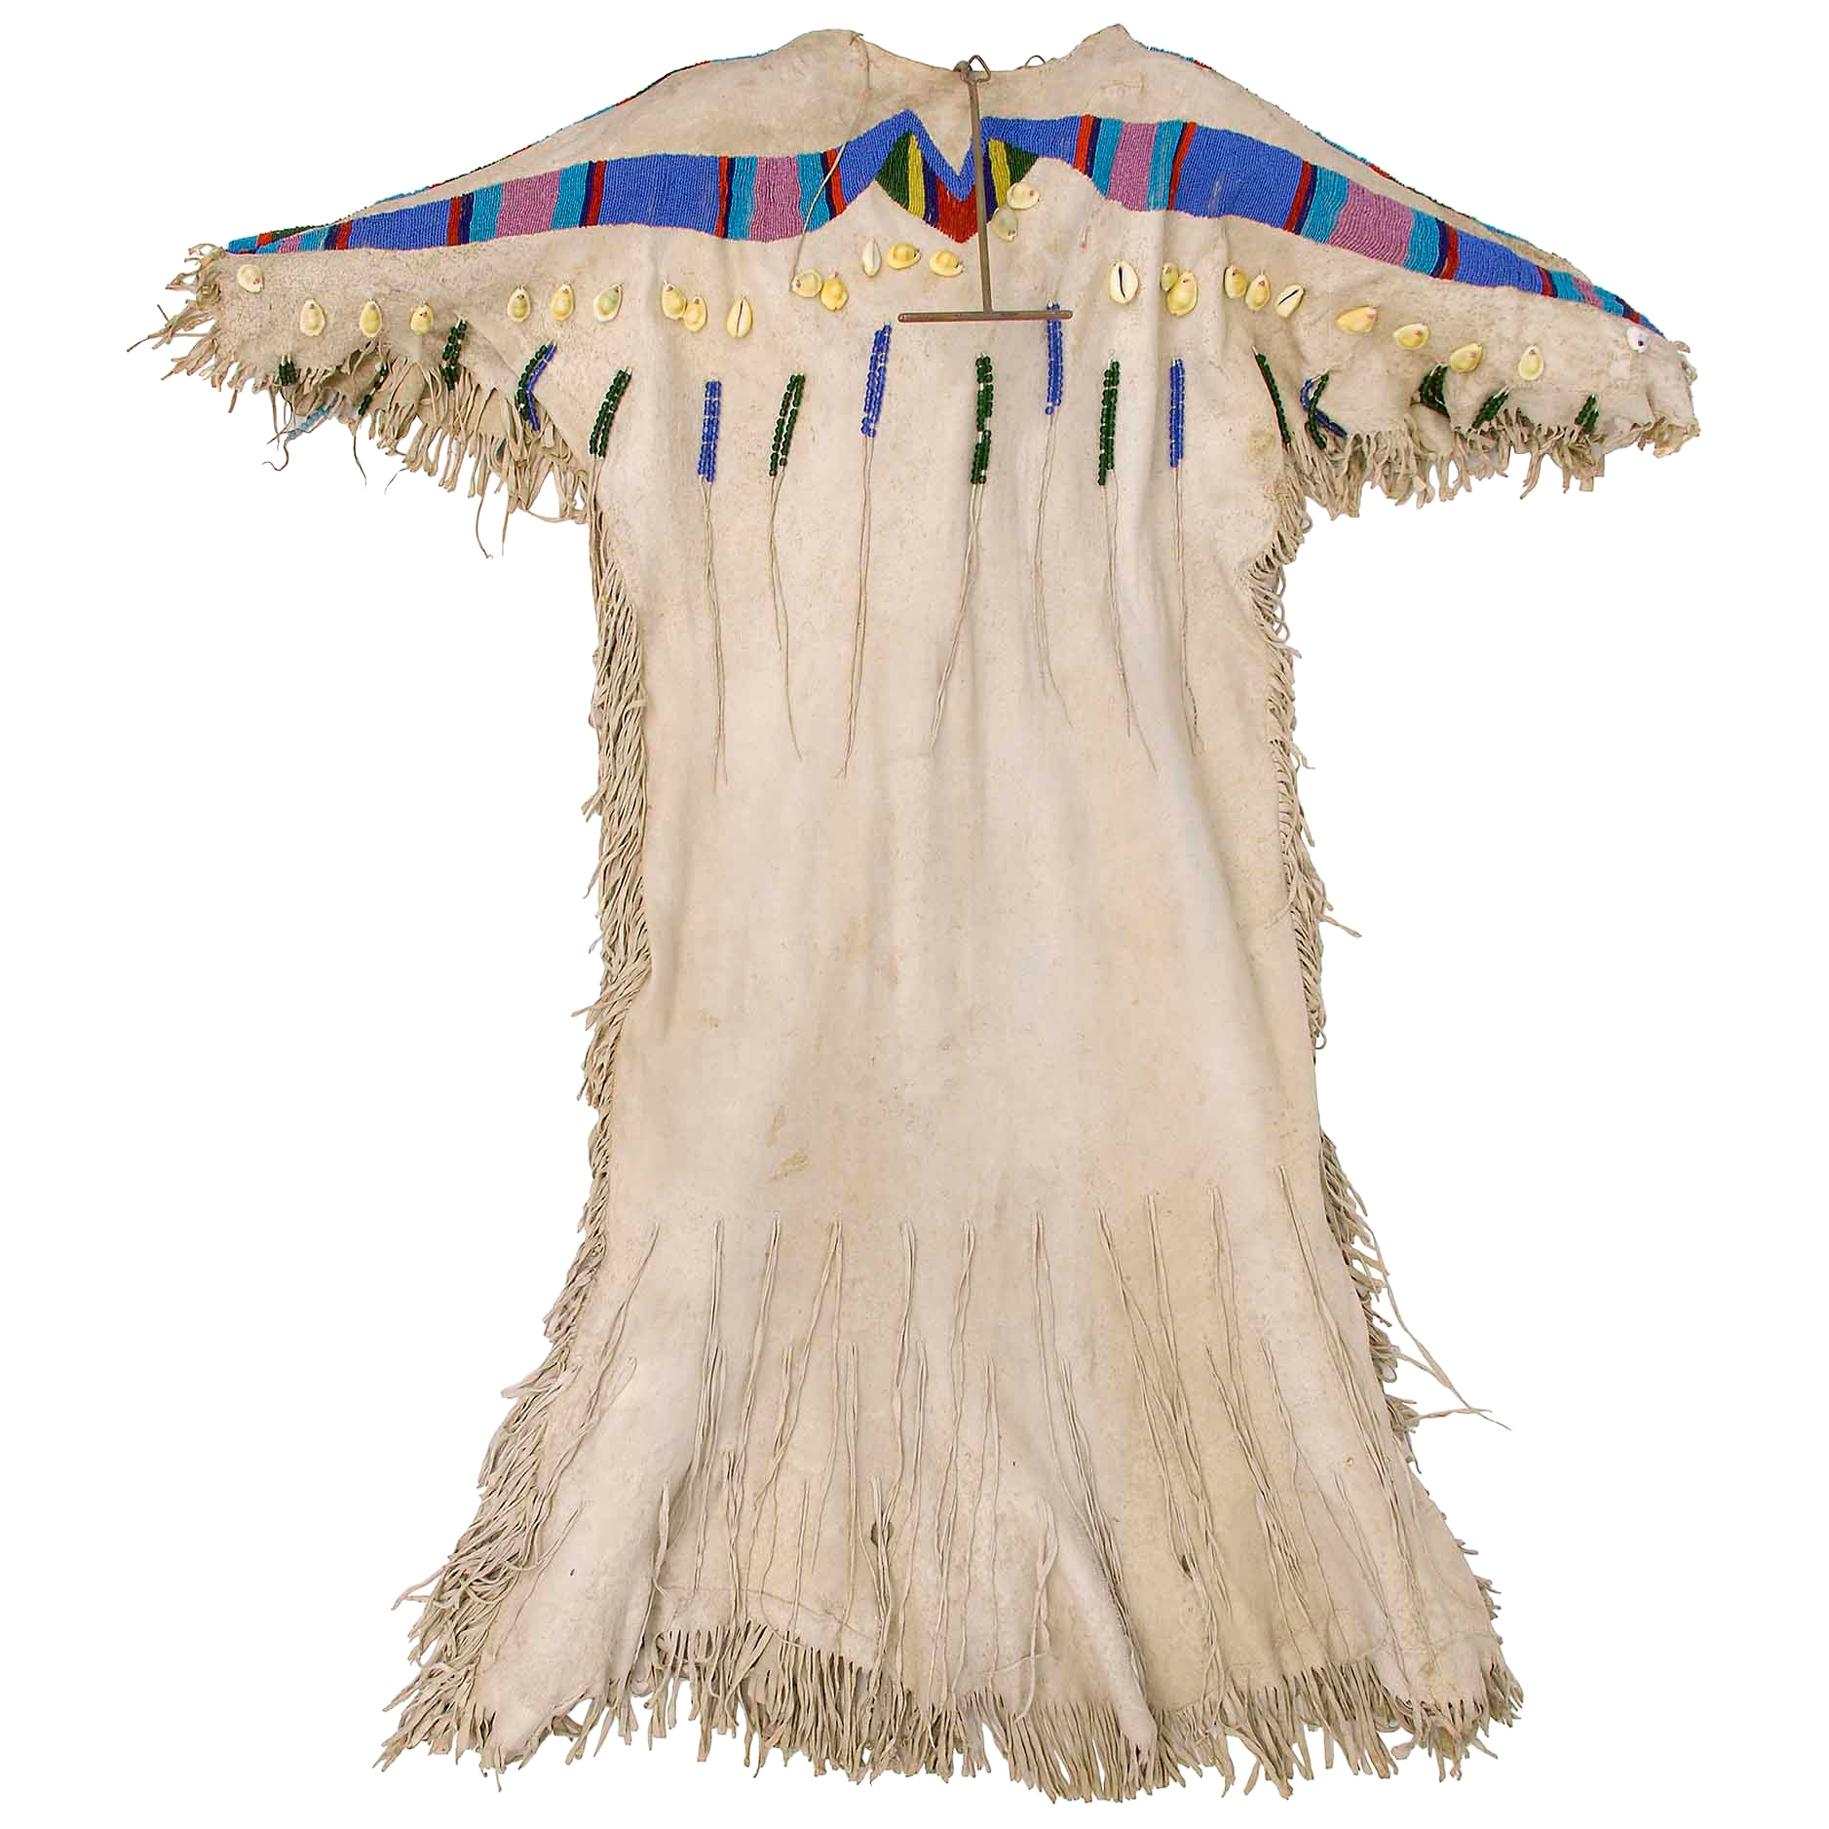 Antique Native American Beaded Hide Dress, Yakima, Plateau Region, circa 1890